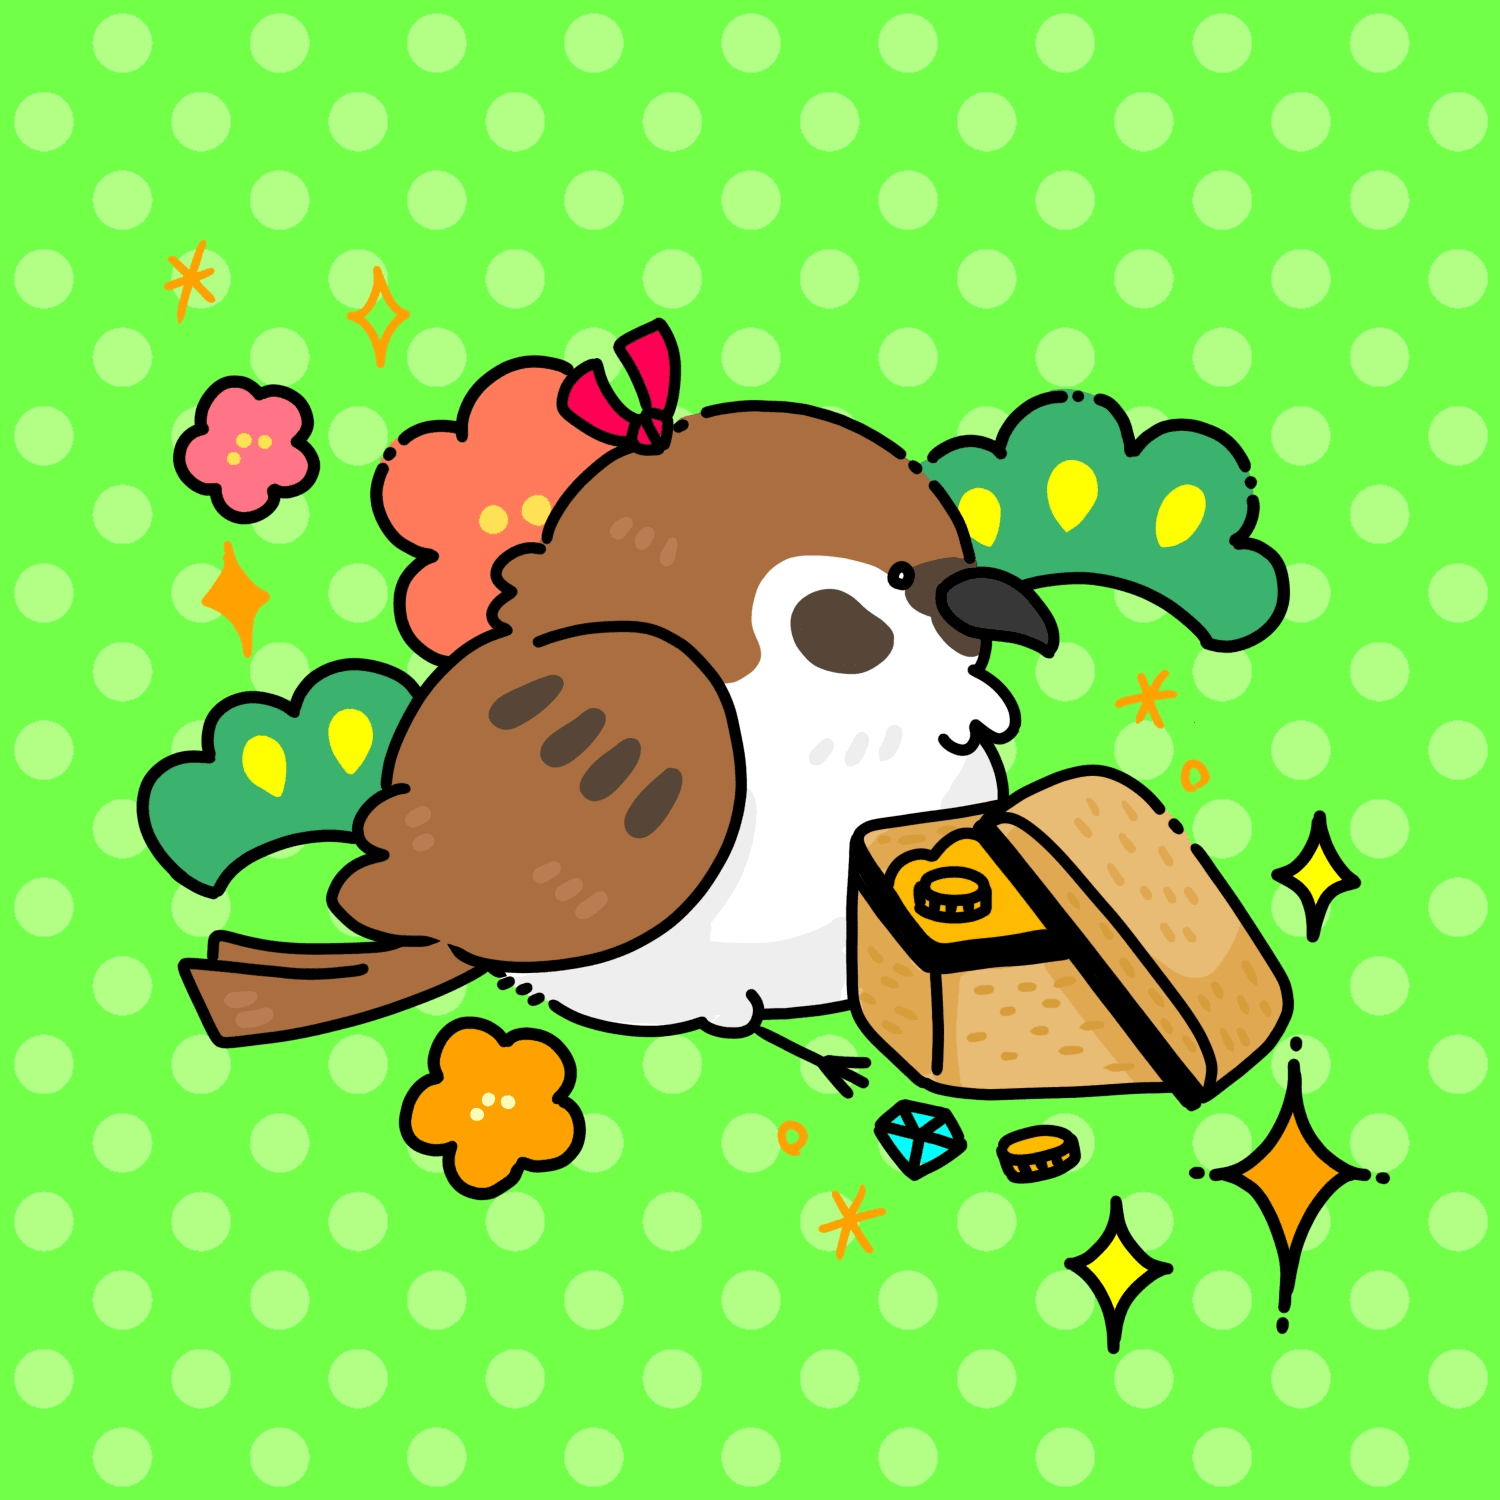 #020 A sparrow that packs treasure in a kudzu basket.